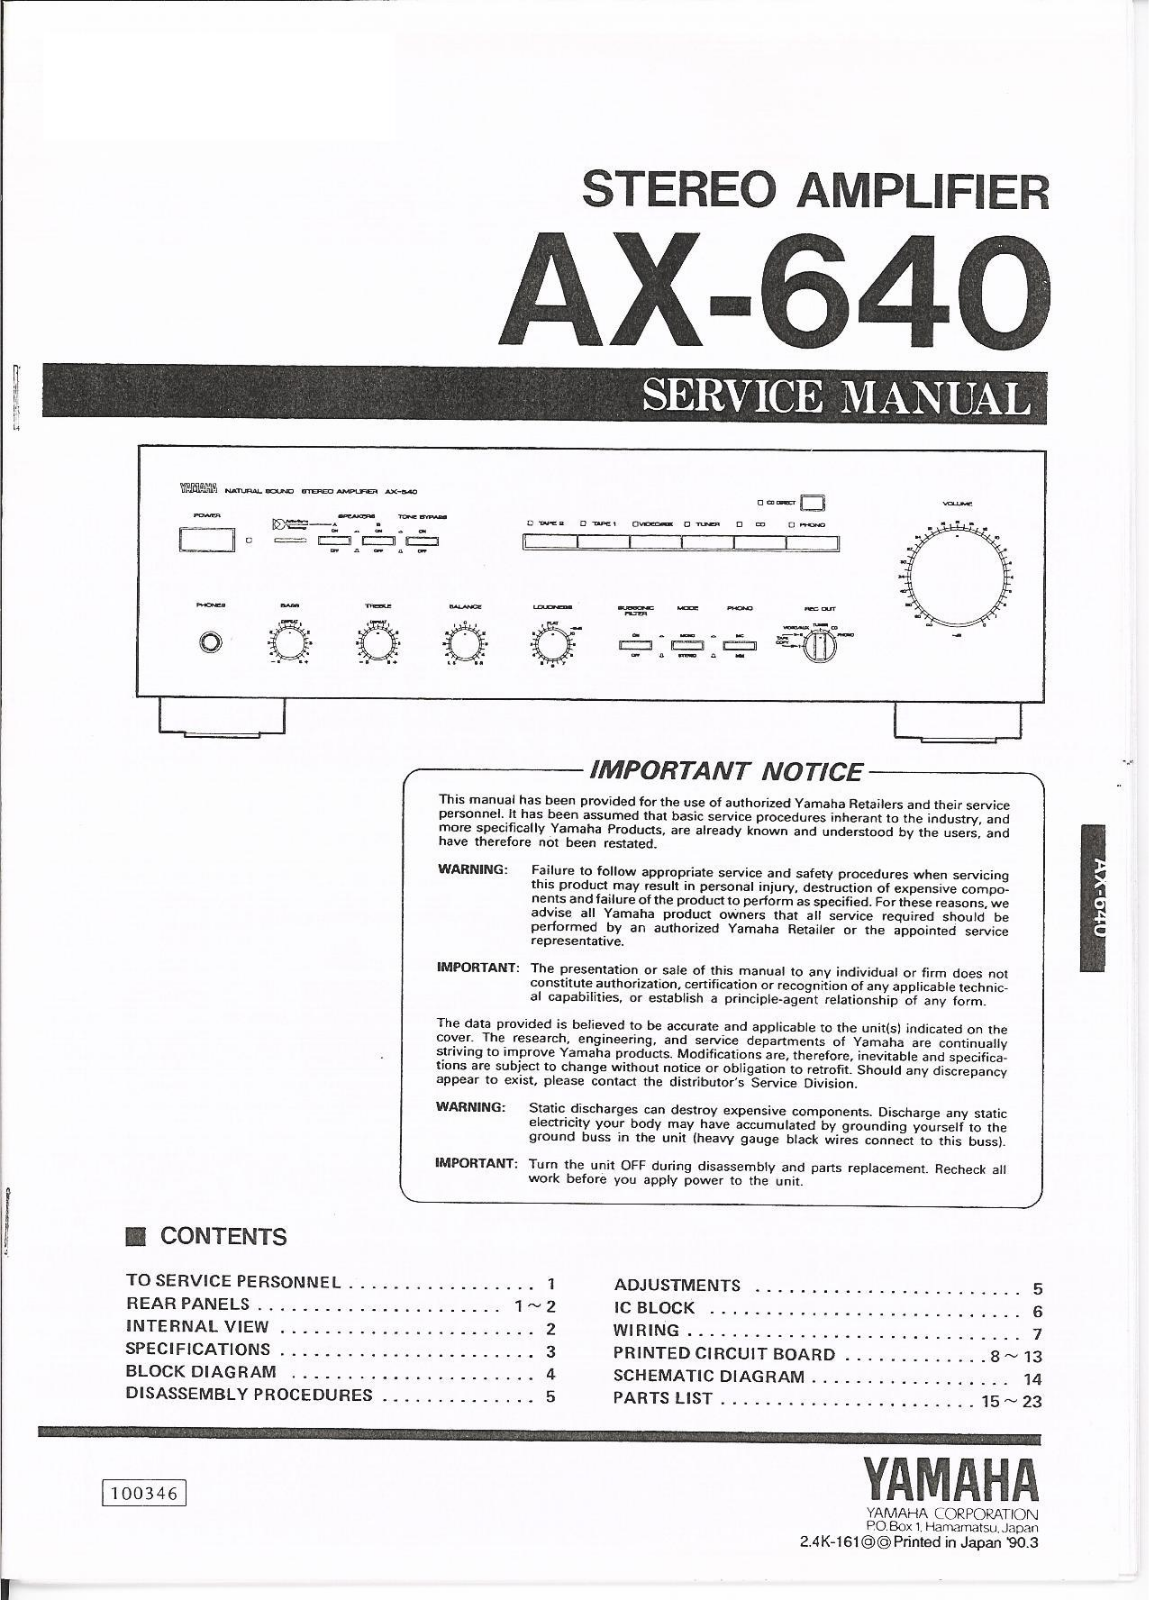 Yamaha AX-640 Service Manual